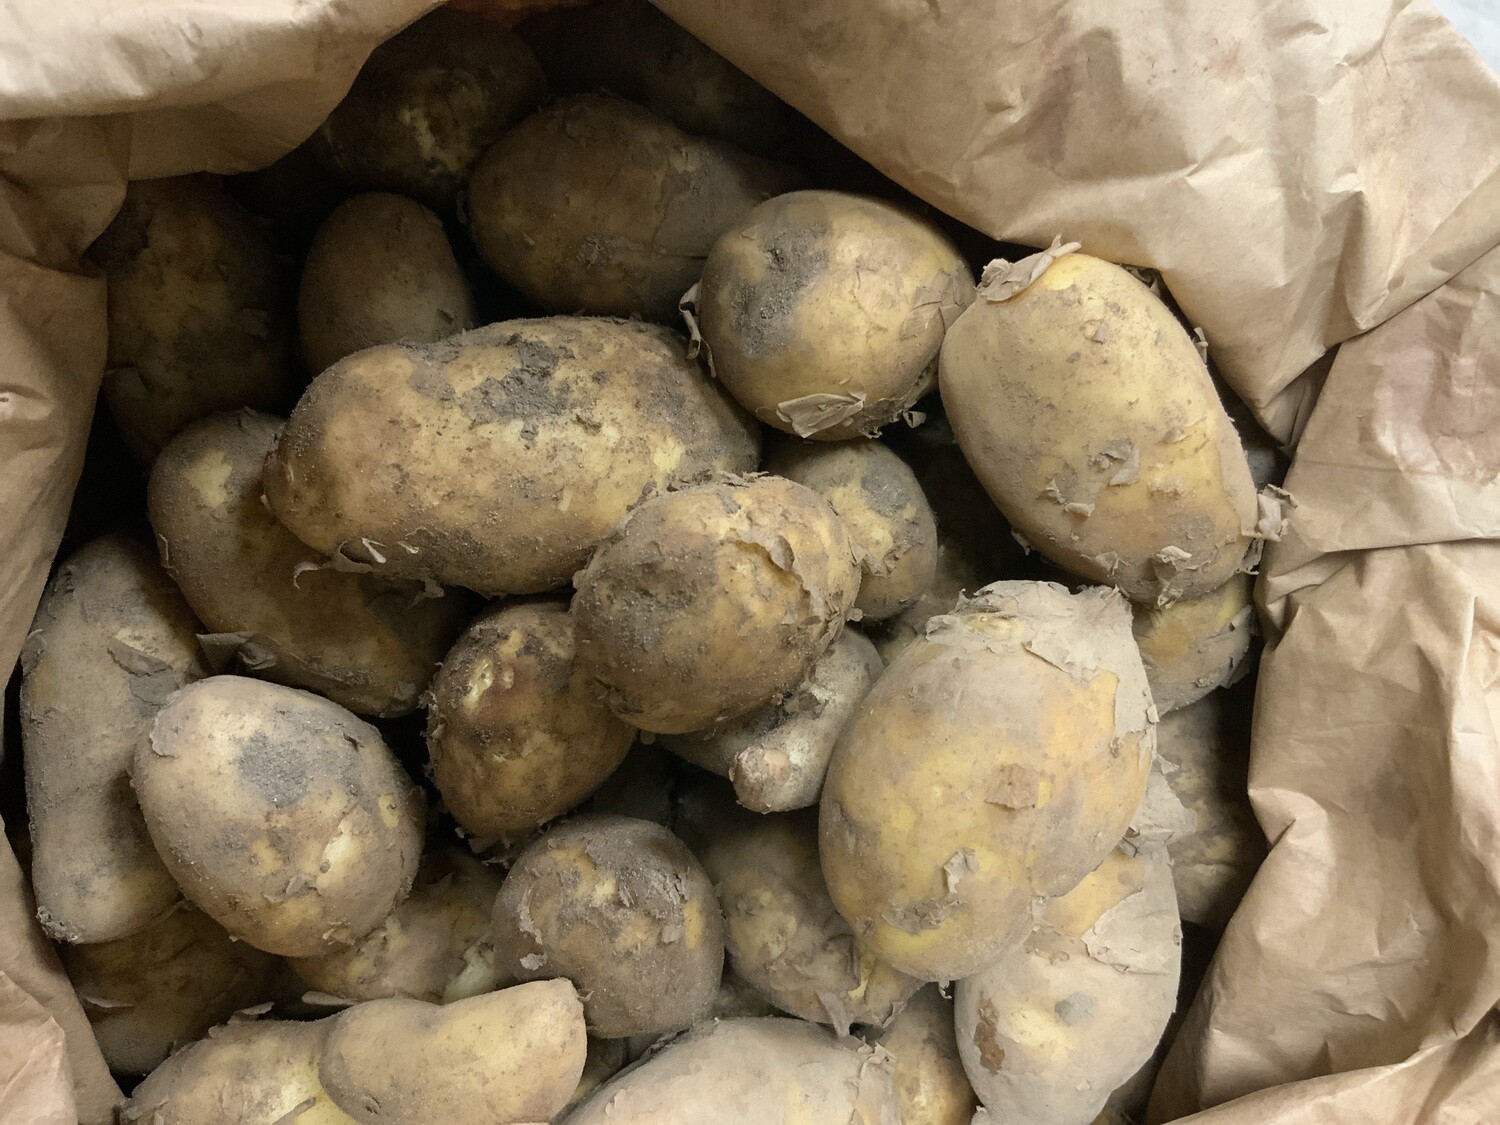 Jersey Royal Potatoes. New season. 500g